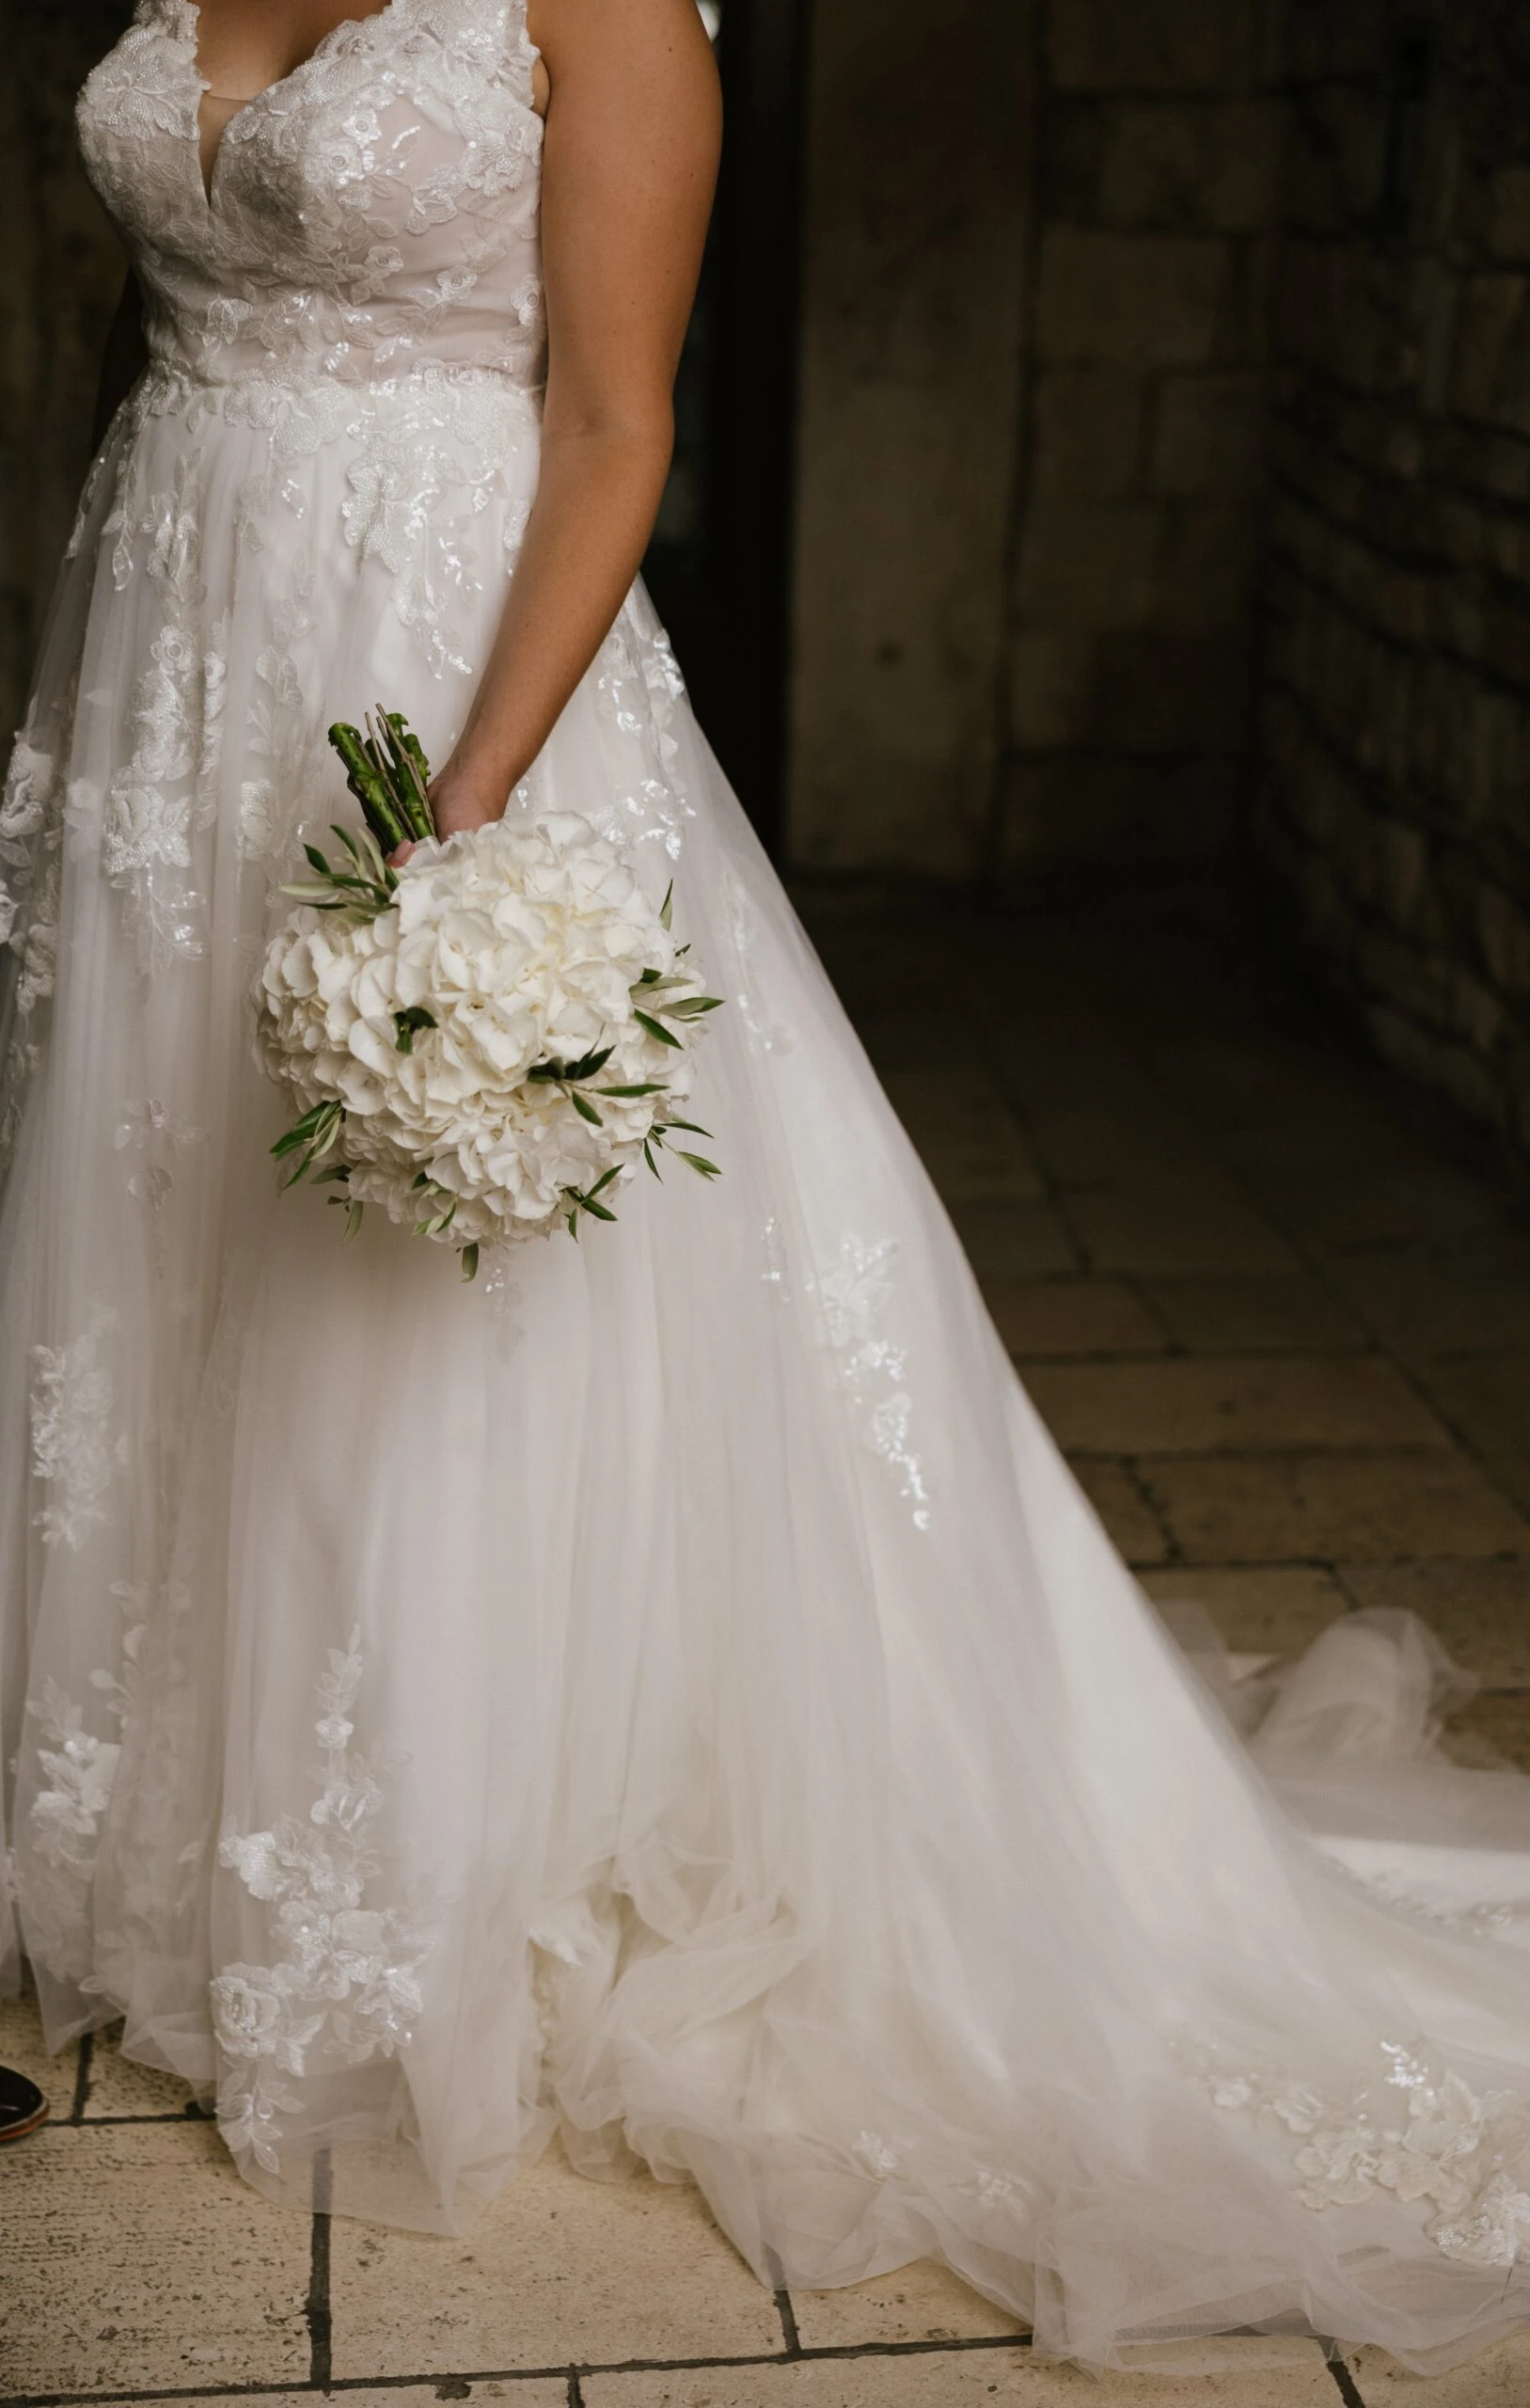 Bride holding flowers wearing a wedding dress